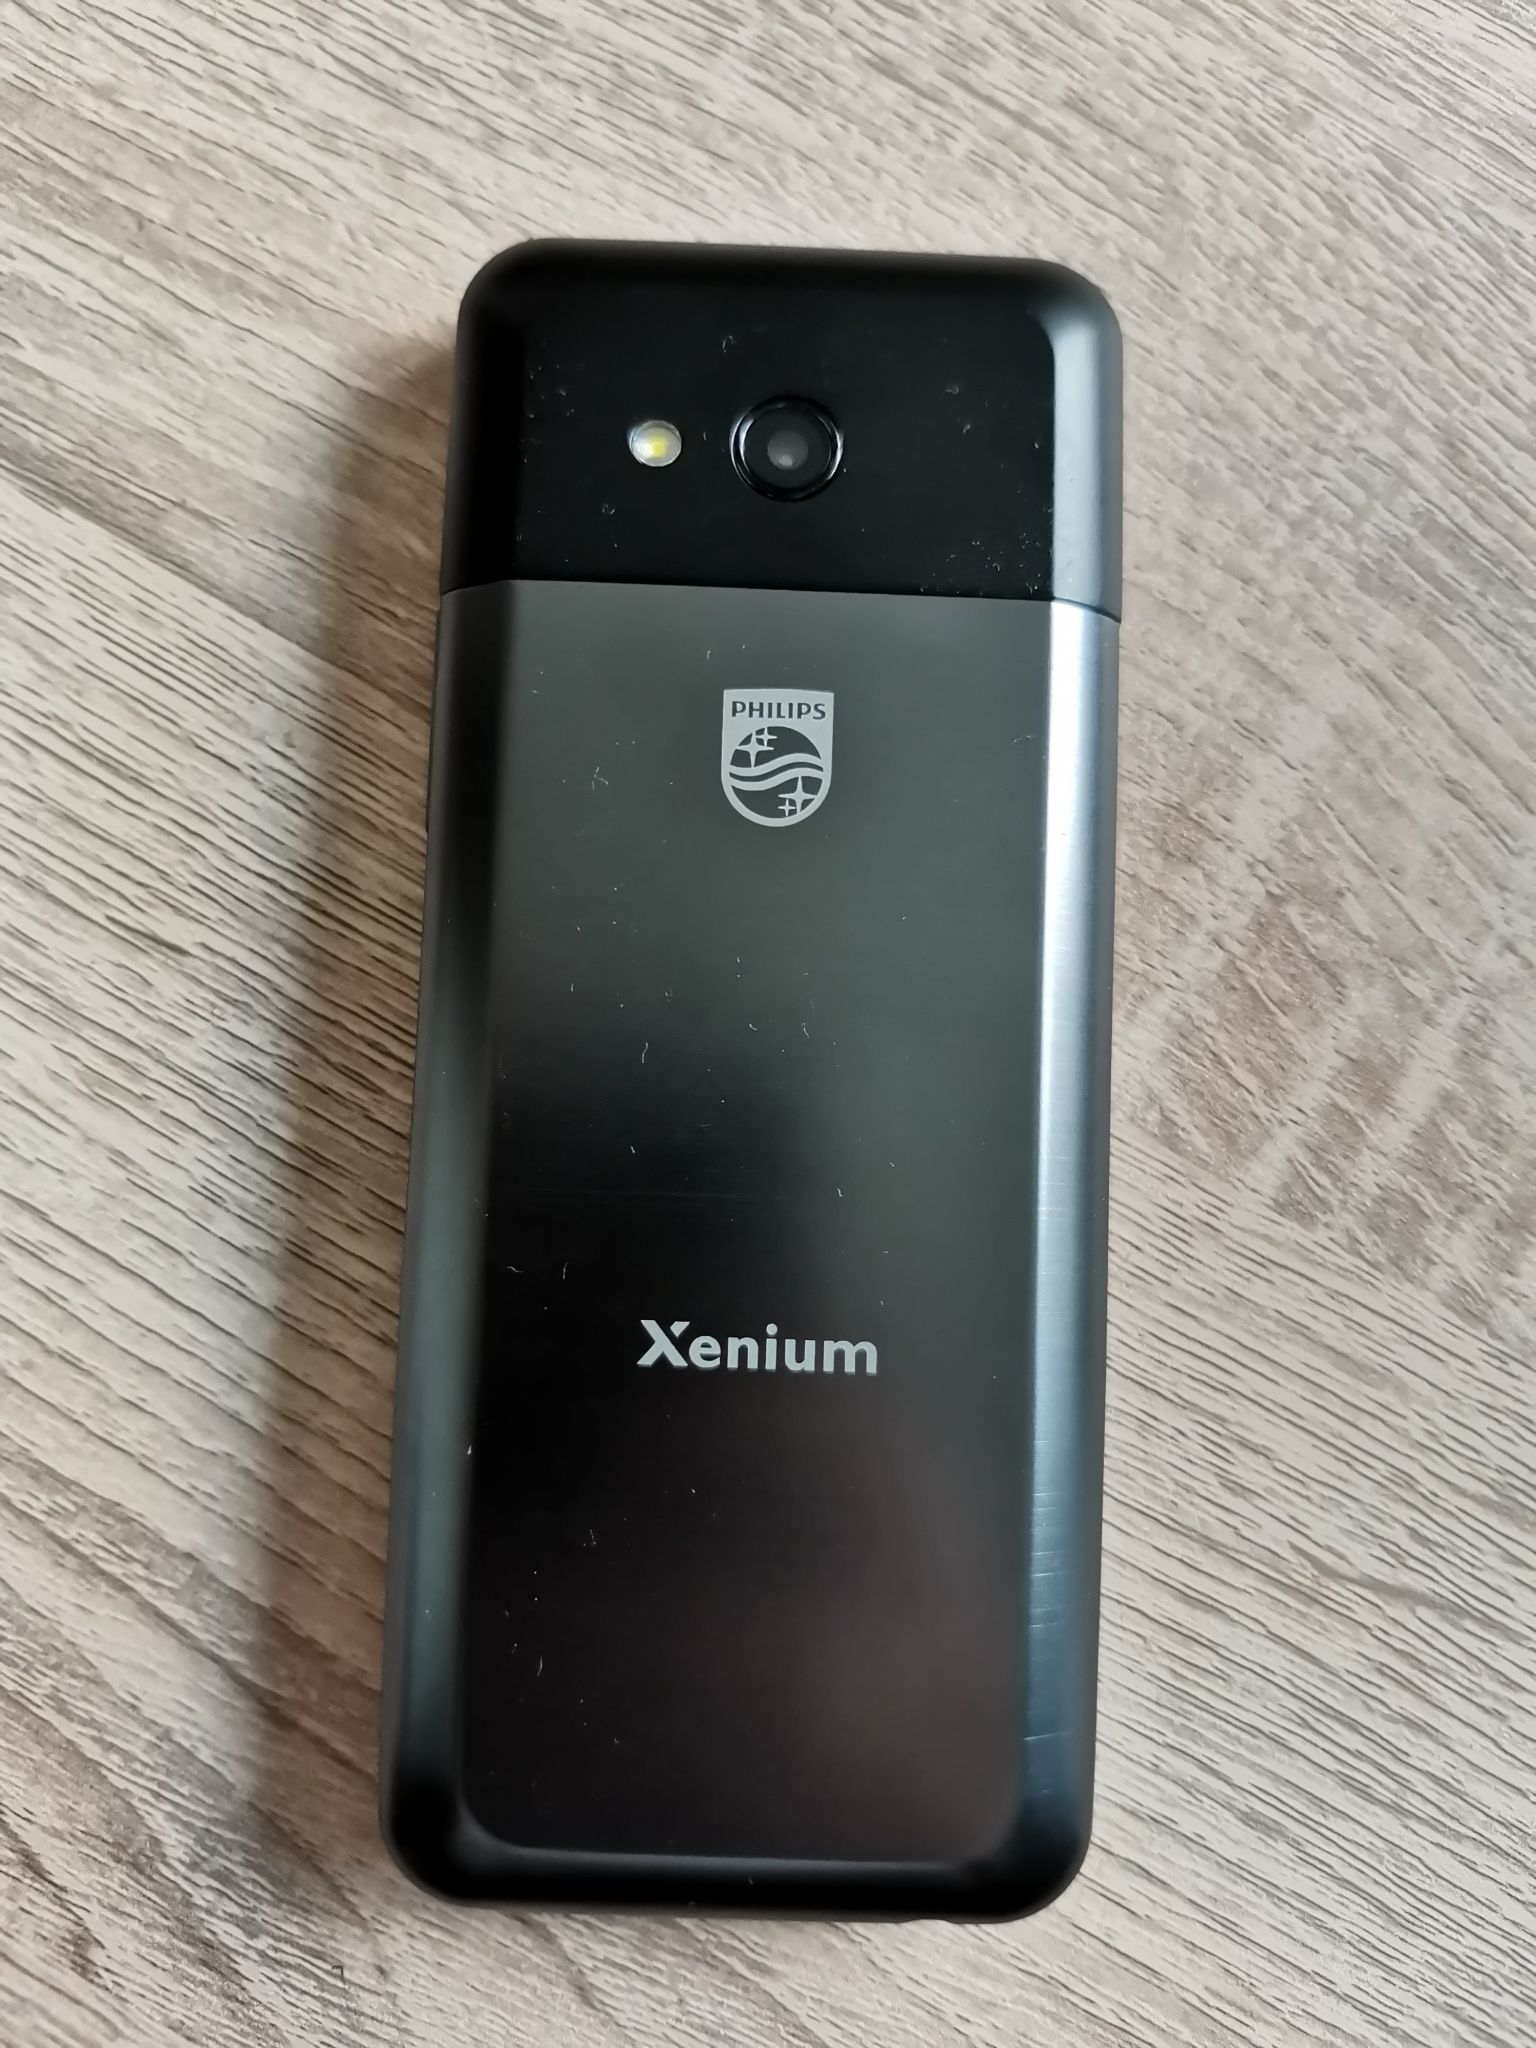 Xenium e590 black. Philips Xenium e590. Мобильный телефон Philips Xenium e590 Black. Philips Xenium e590 Black (черный). Мобильный телефон Philips Xenium e590 Black размер.